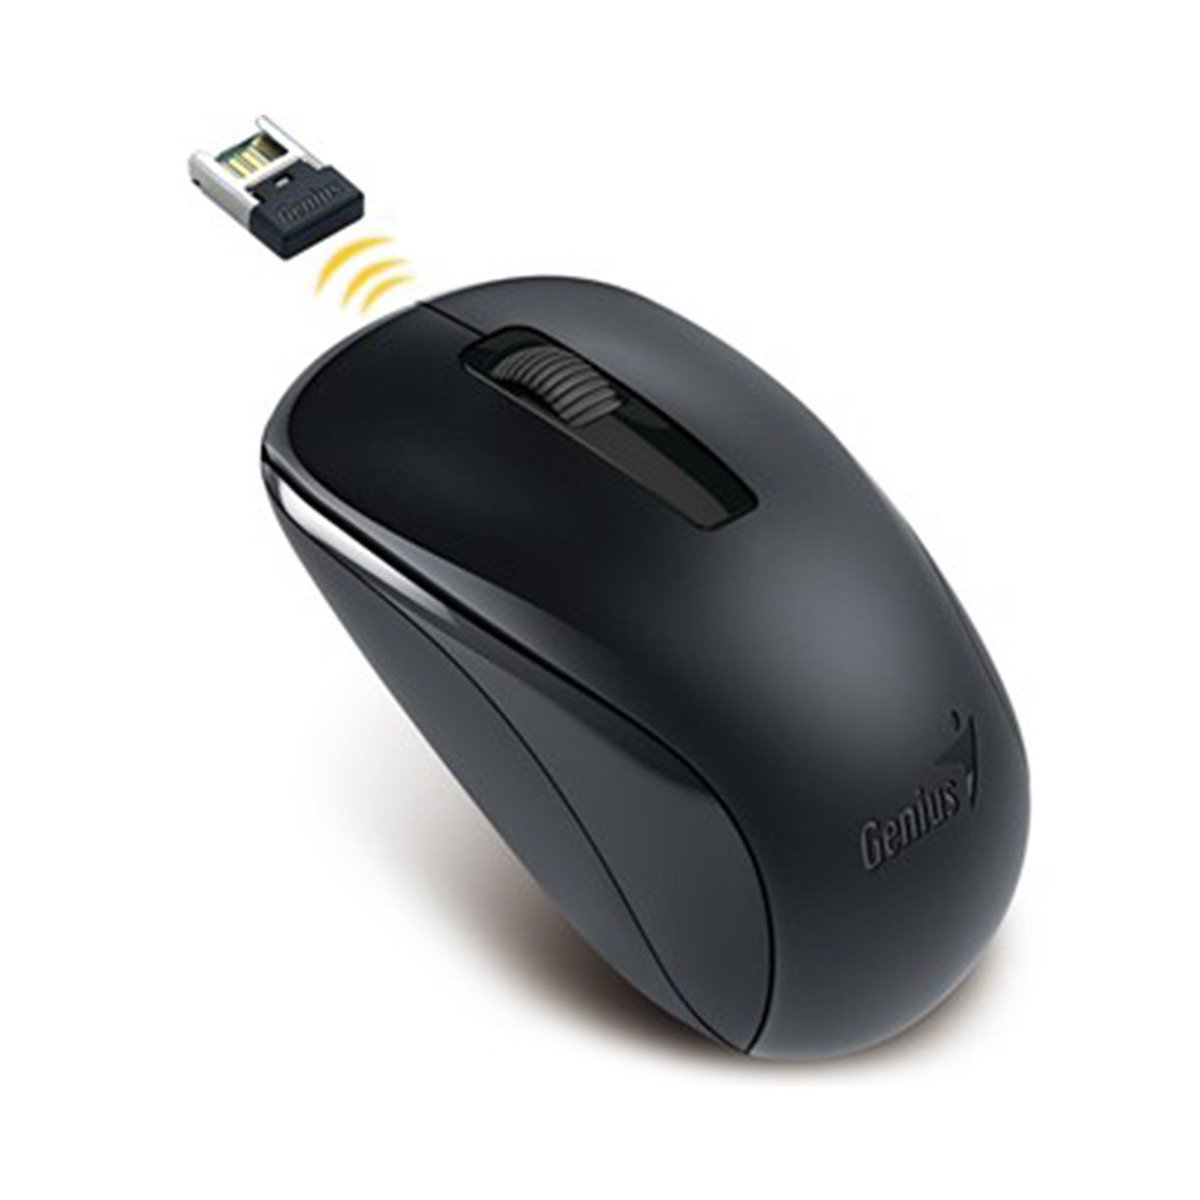 Genius Wireless Mouse Blue Eye NX-7005